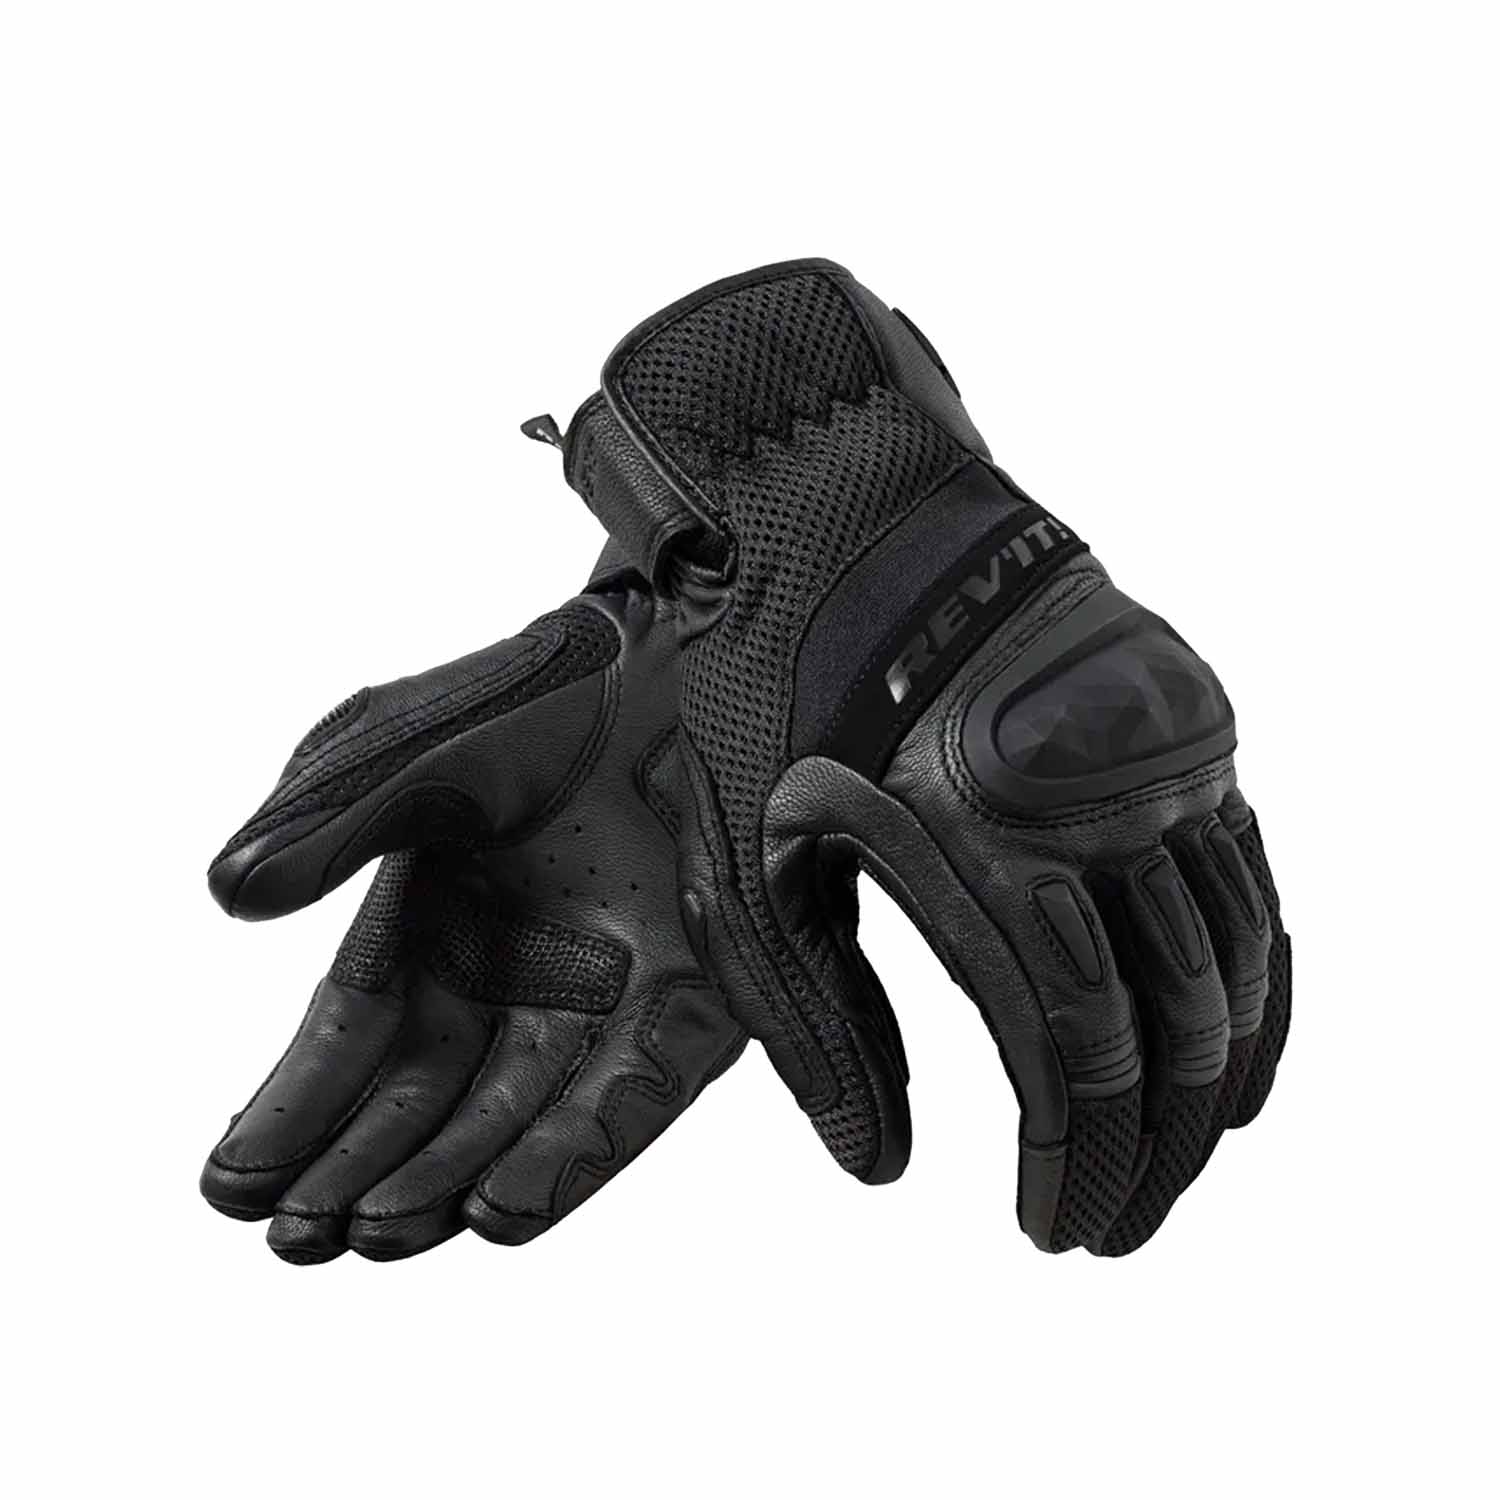 Image of REV'IT! Dirt 4 Gloves Black Size L ID 8700001383400